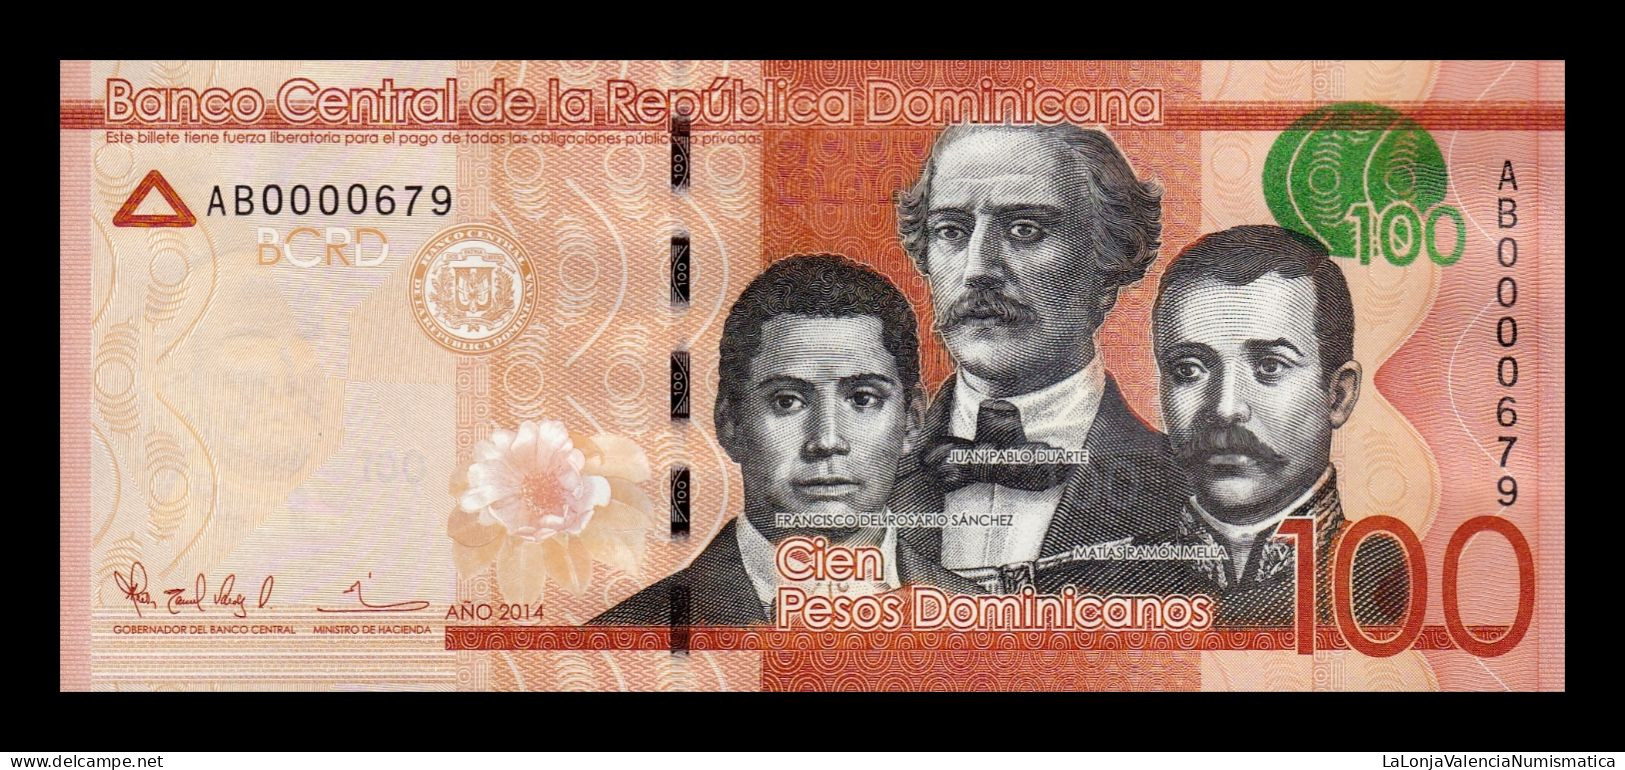 República Dominicana 100 Pesos Dominicanos 2014 Pick 190a Low Serial 661 Sc Unc - Dominicana